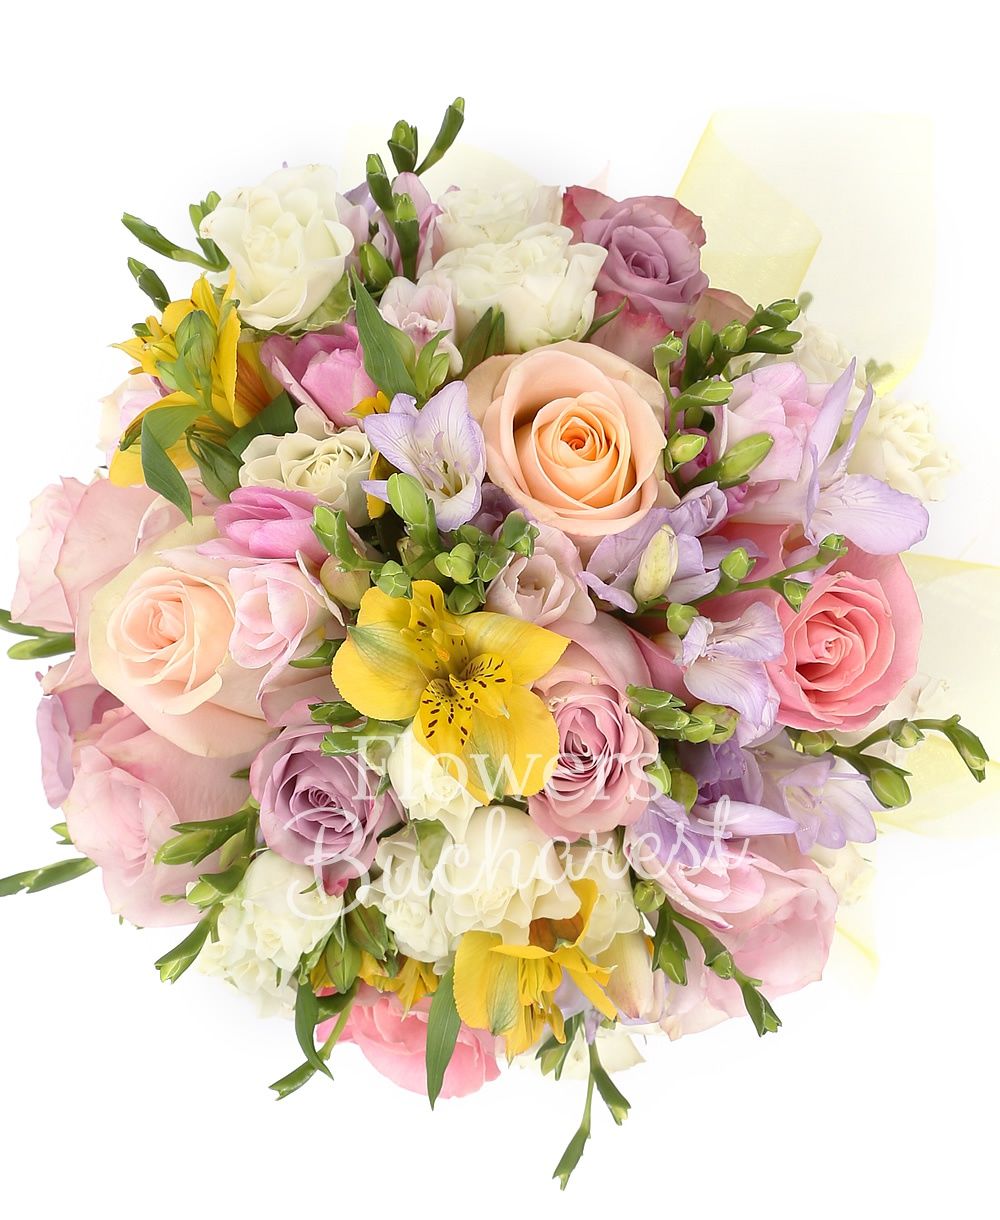 10 purple freesias, 2 yellow astranția, 5 white miniroses, 3 cream roses, 5 purple roses, 3 pink roses